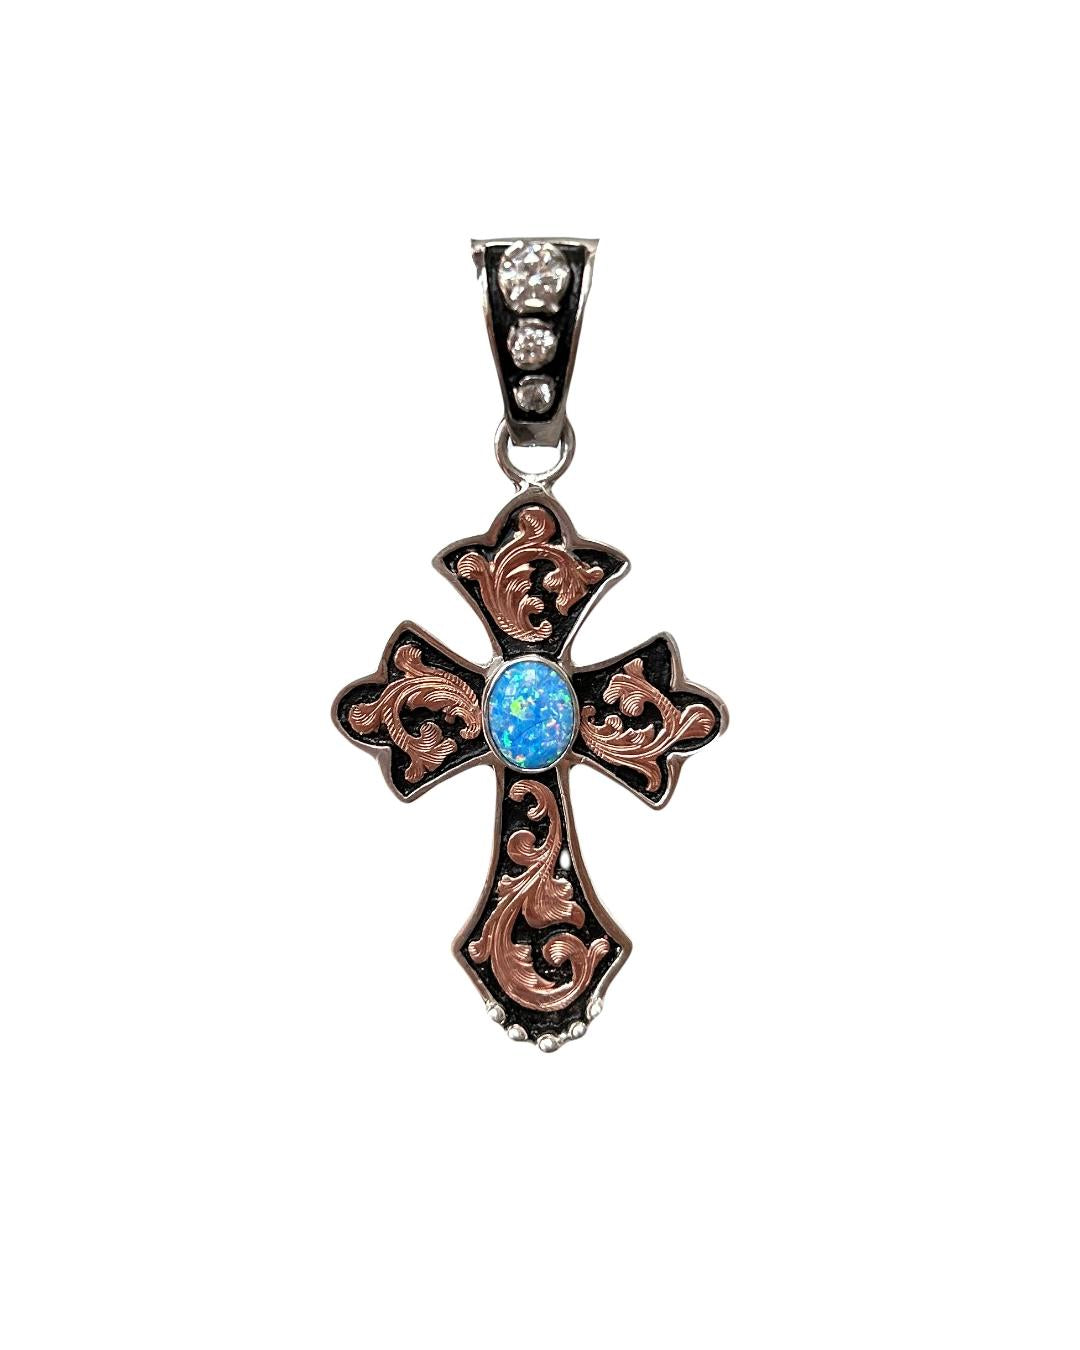 Opal Cross Pendant